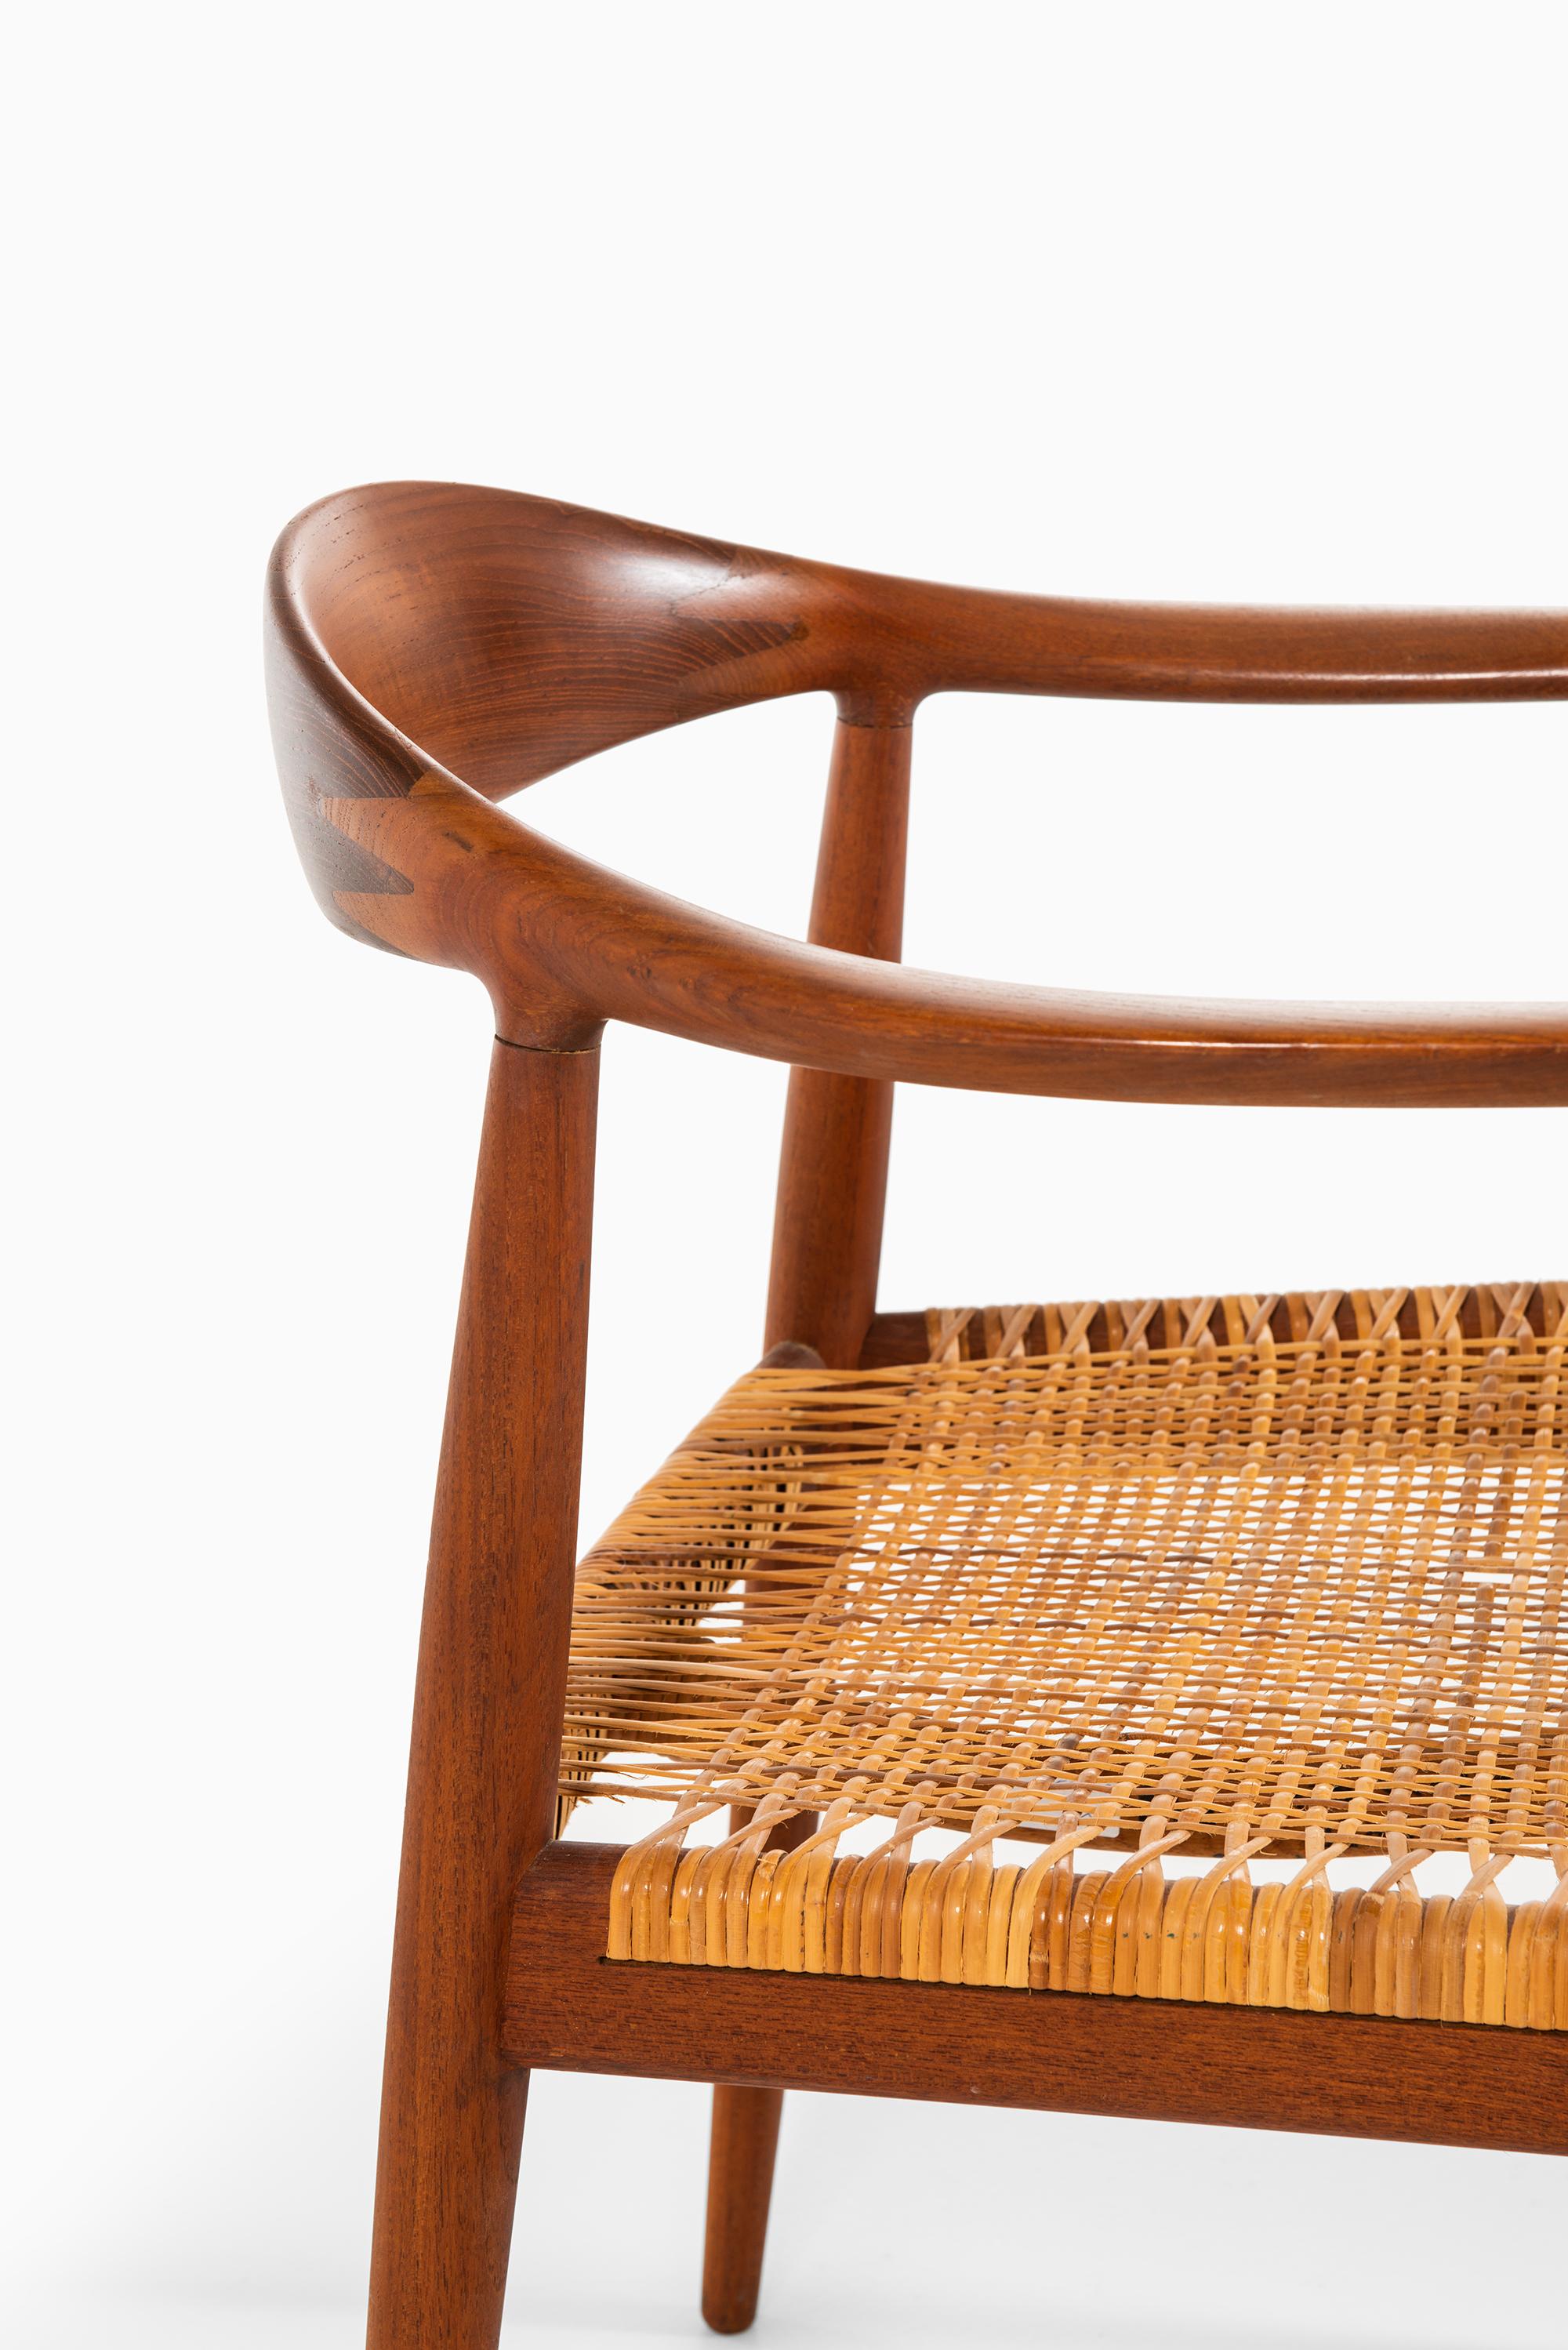 Mid-20th Century Hans Wegner JH-501, the Chair Produced by Johannes Hansen in Denmark